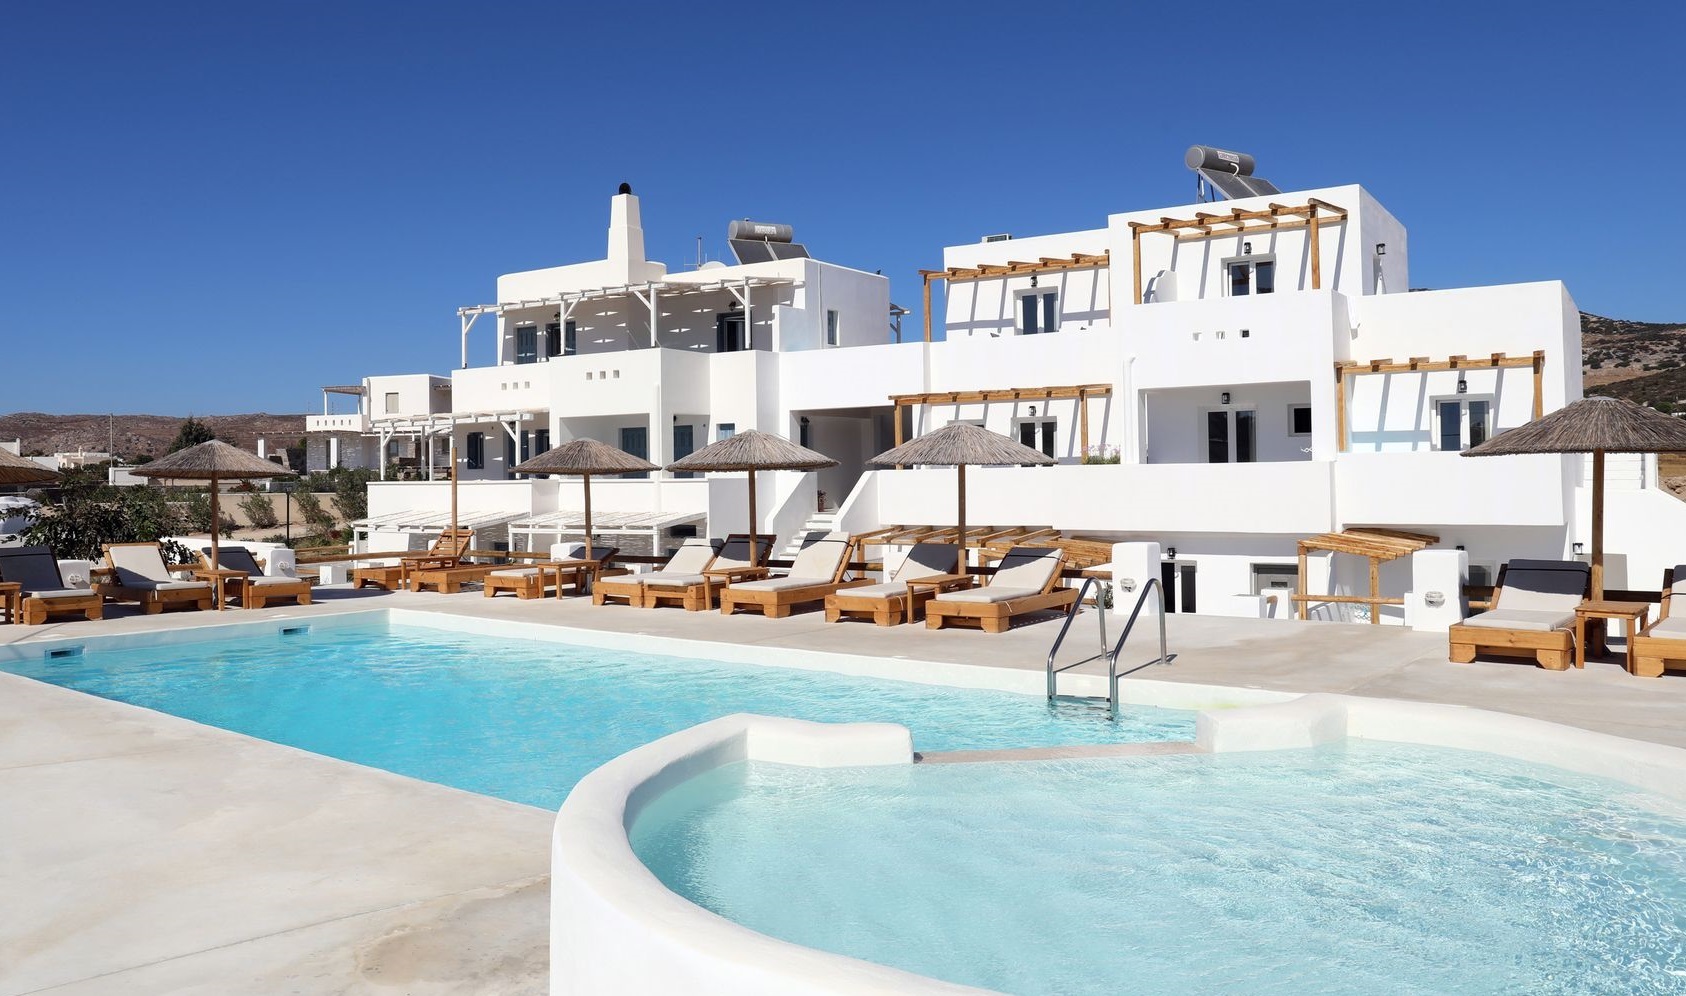 Irida Luxury Apartments - Καστράκι, Νάξος ✦ -10% ✦ 3 Ημέρες (2 Διανυκτερεύσεις) ✦ 2 άτομα ✦ 2 ✦ 01/09/2022 έως 30/09/2022 ✦ Κοντά σε παραλία!